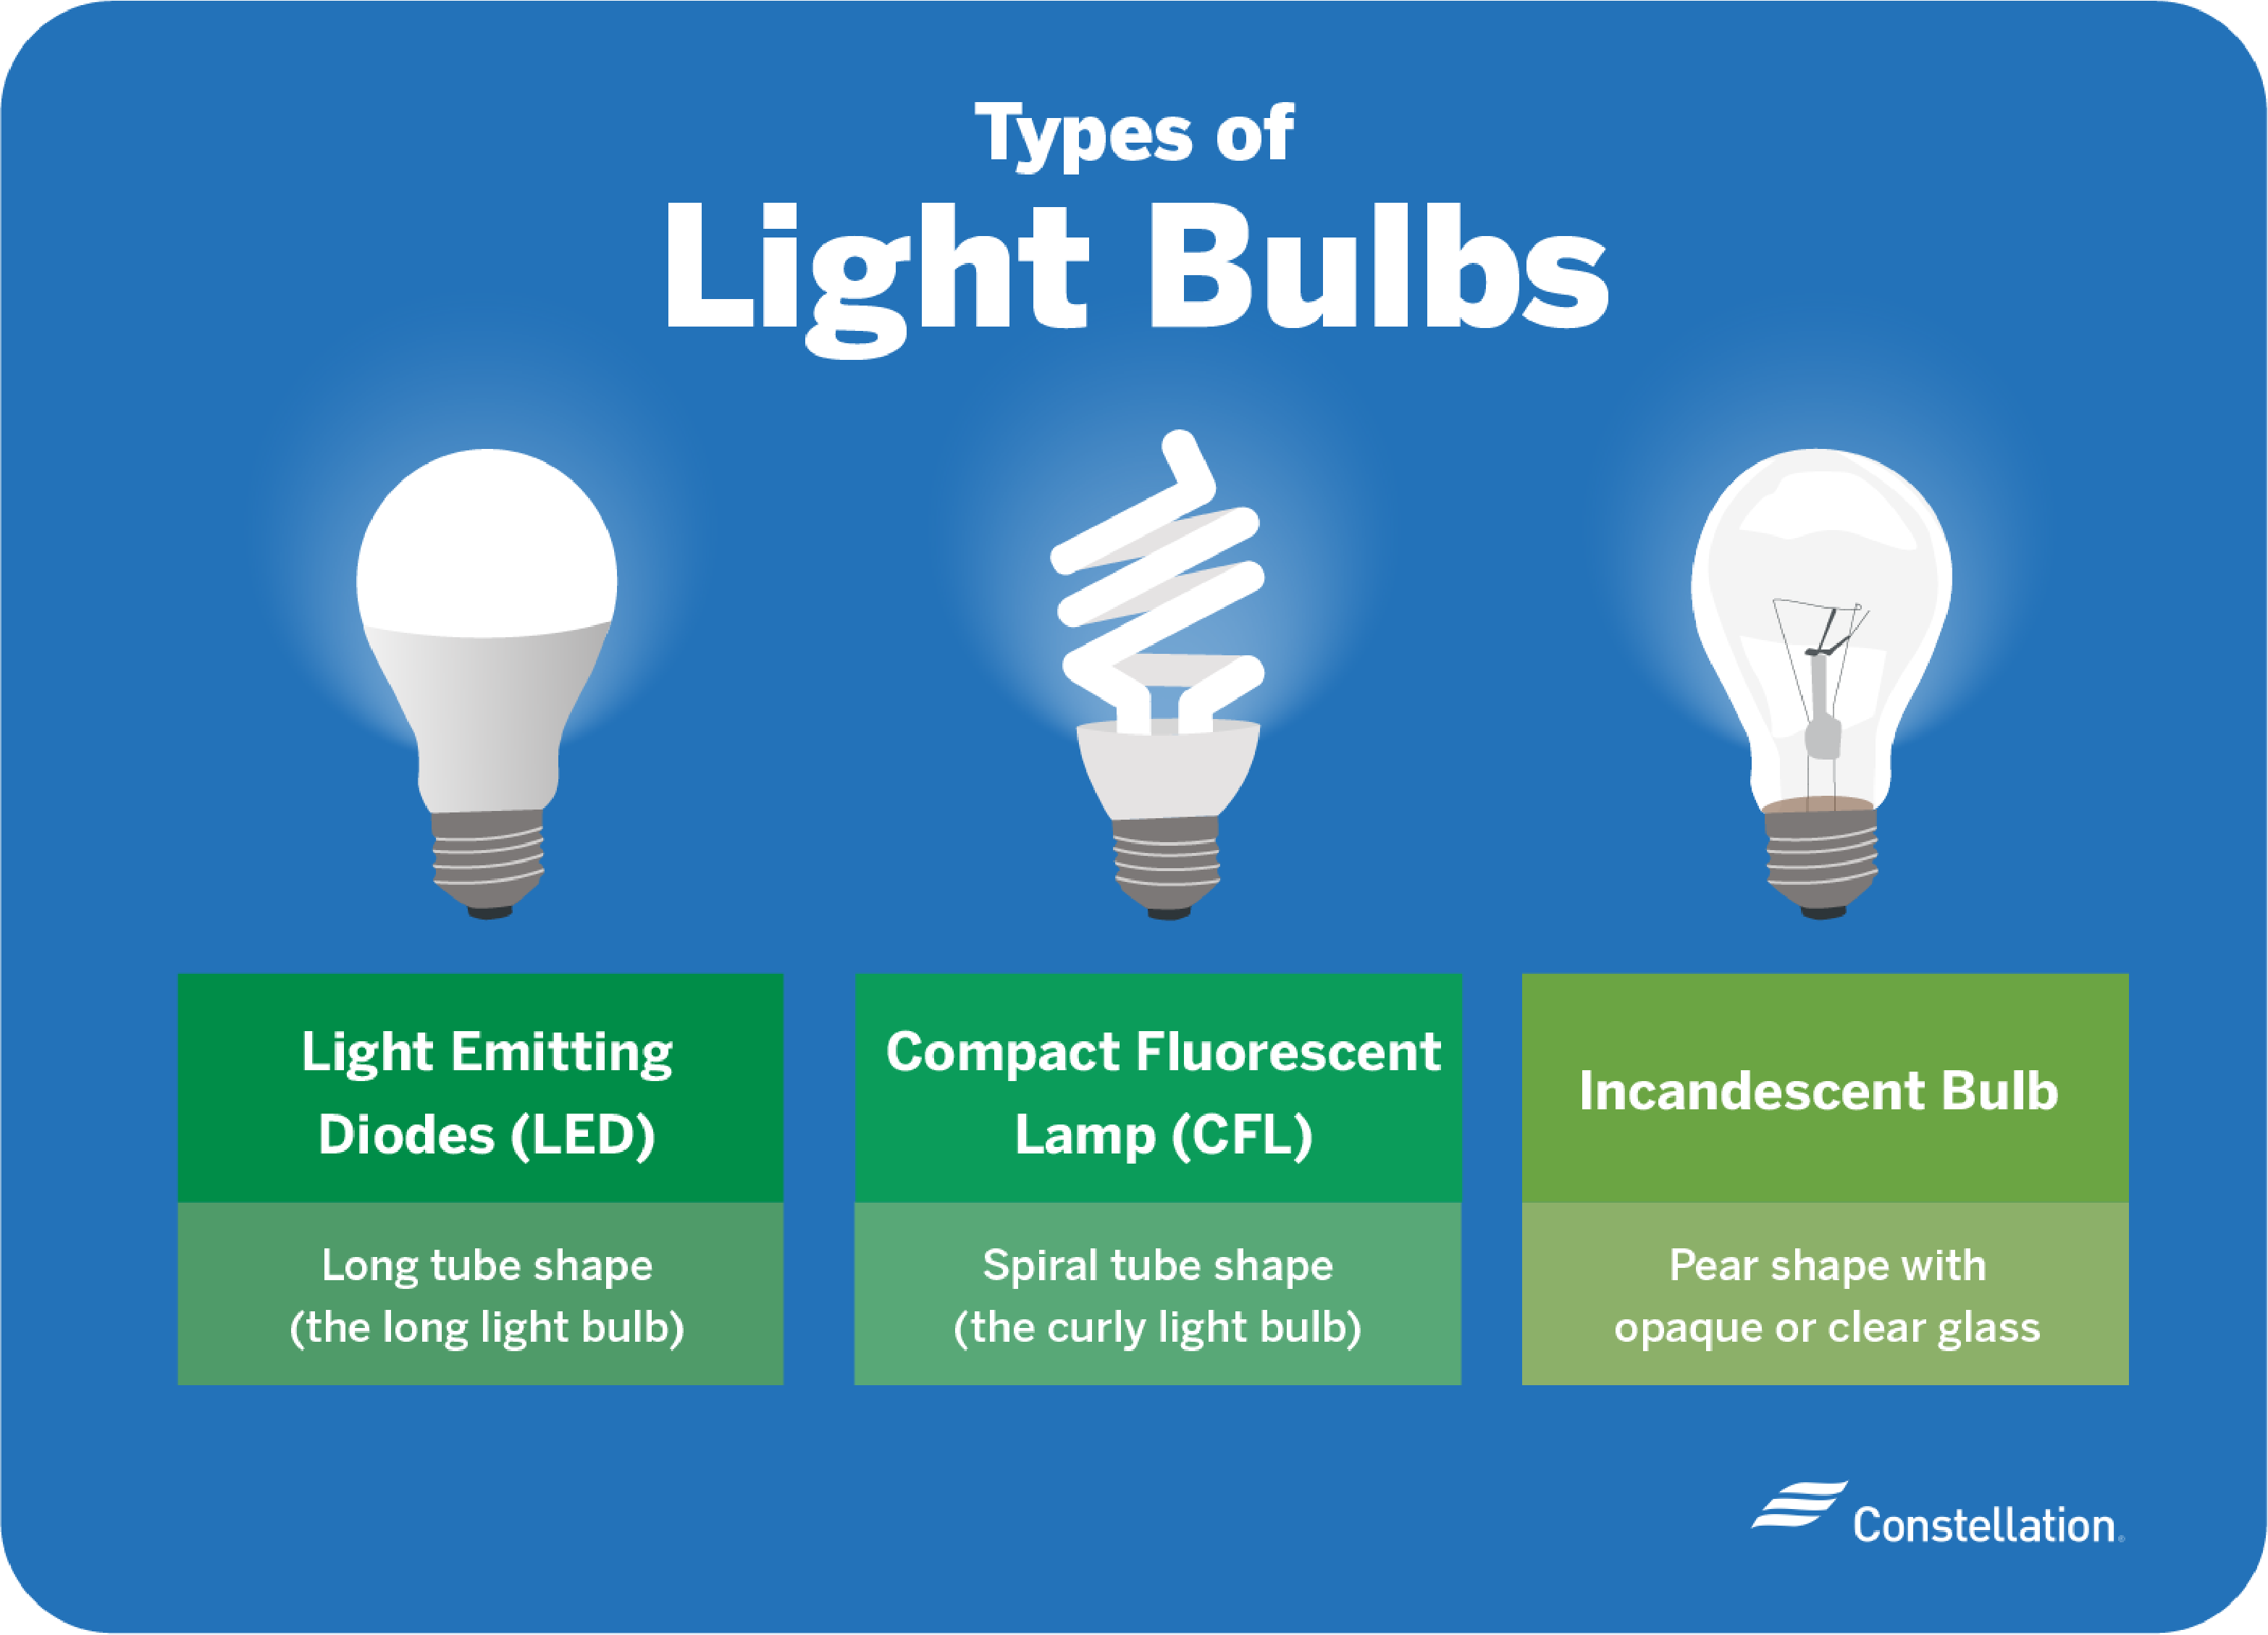 Types of lightbulbs: LED, CFL, Incandescent